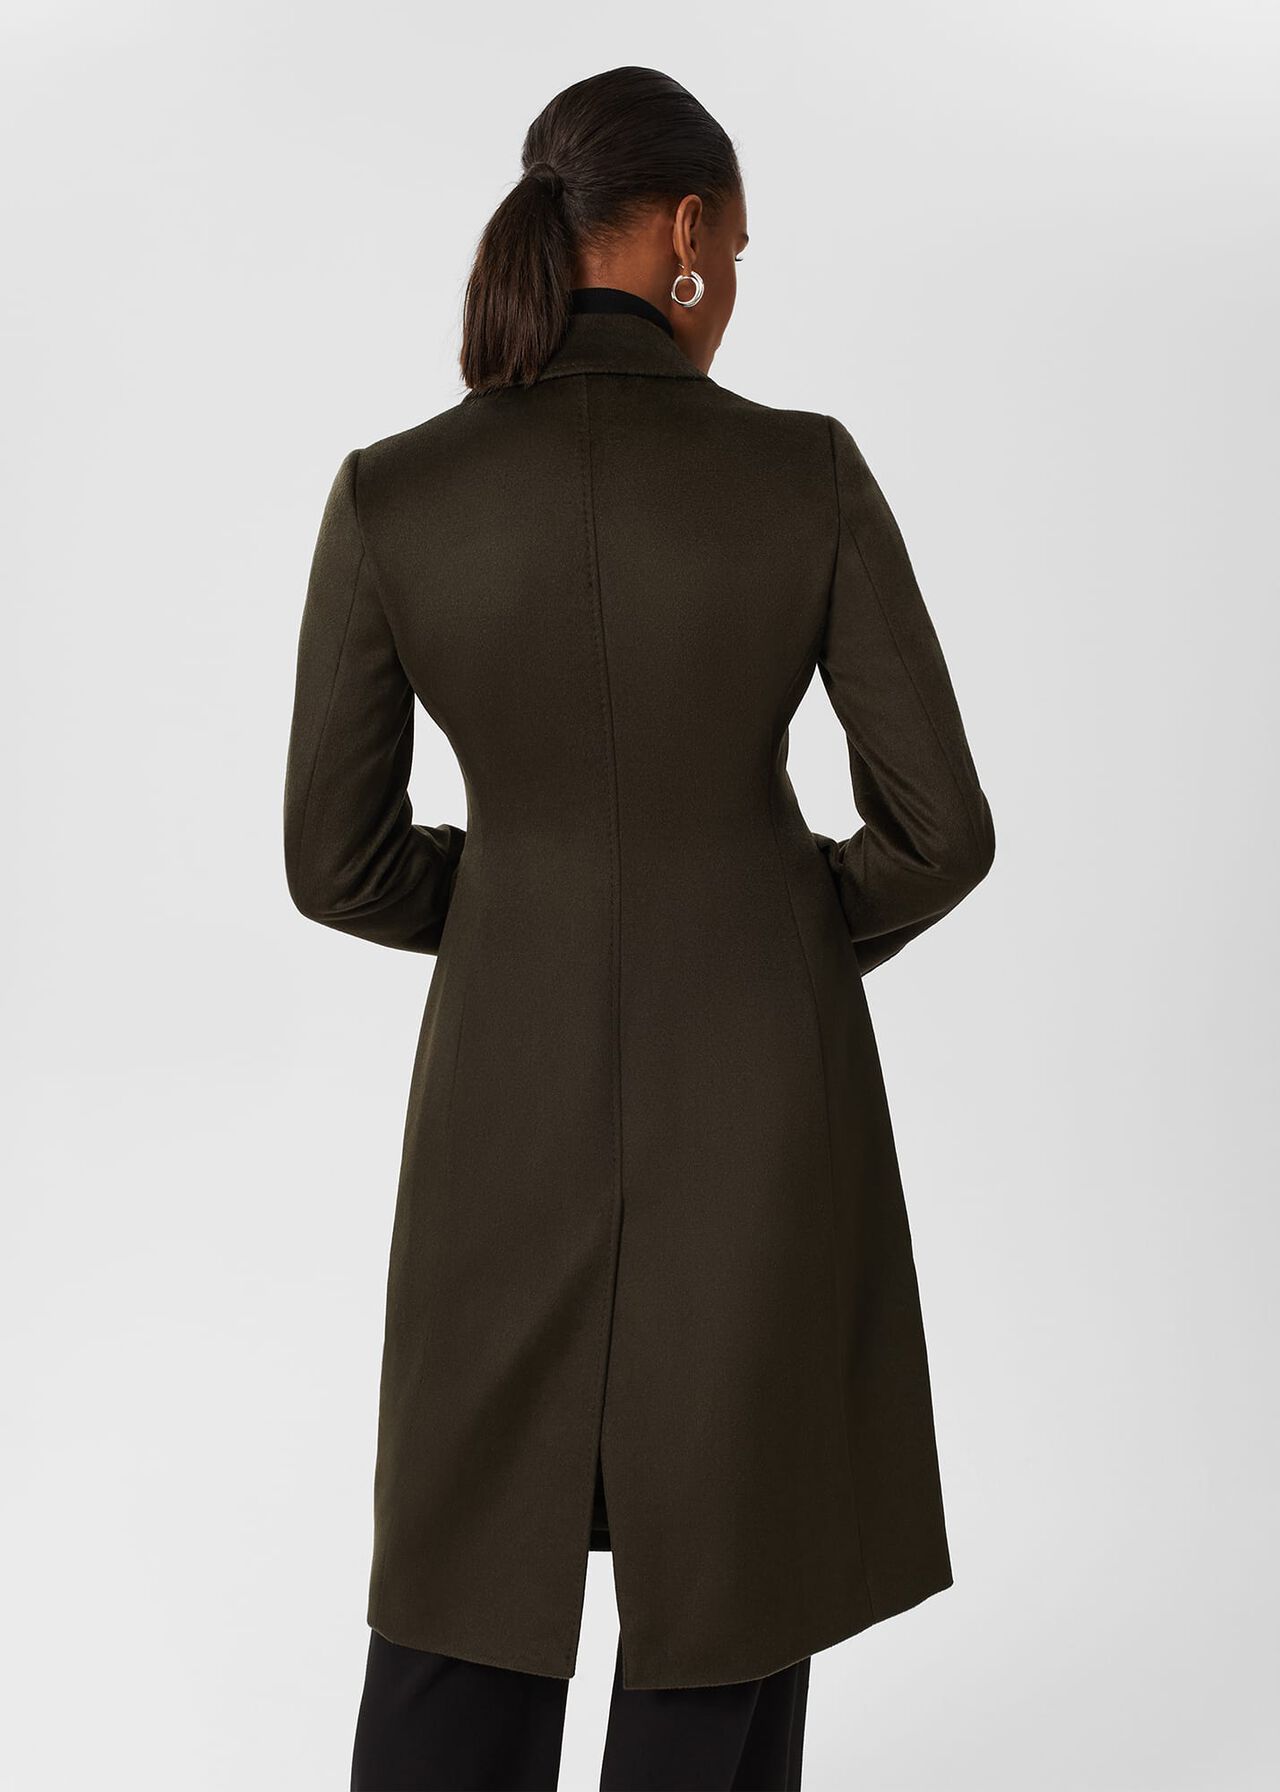 Elva Wool Coat, Dark Olive, hi-res